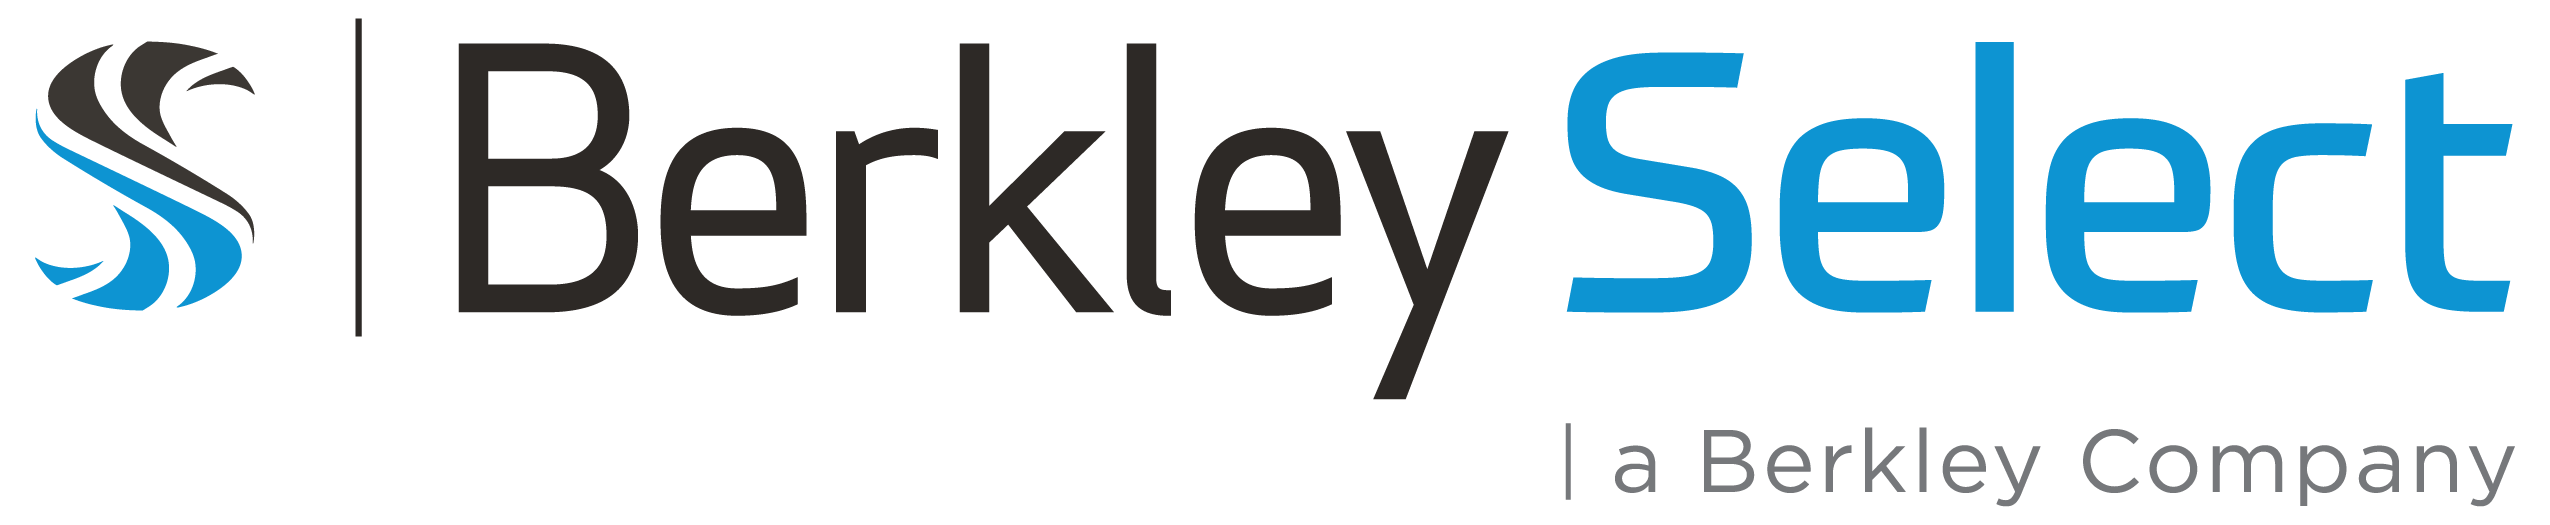 Berkley Select